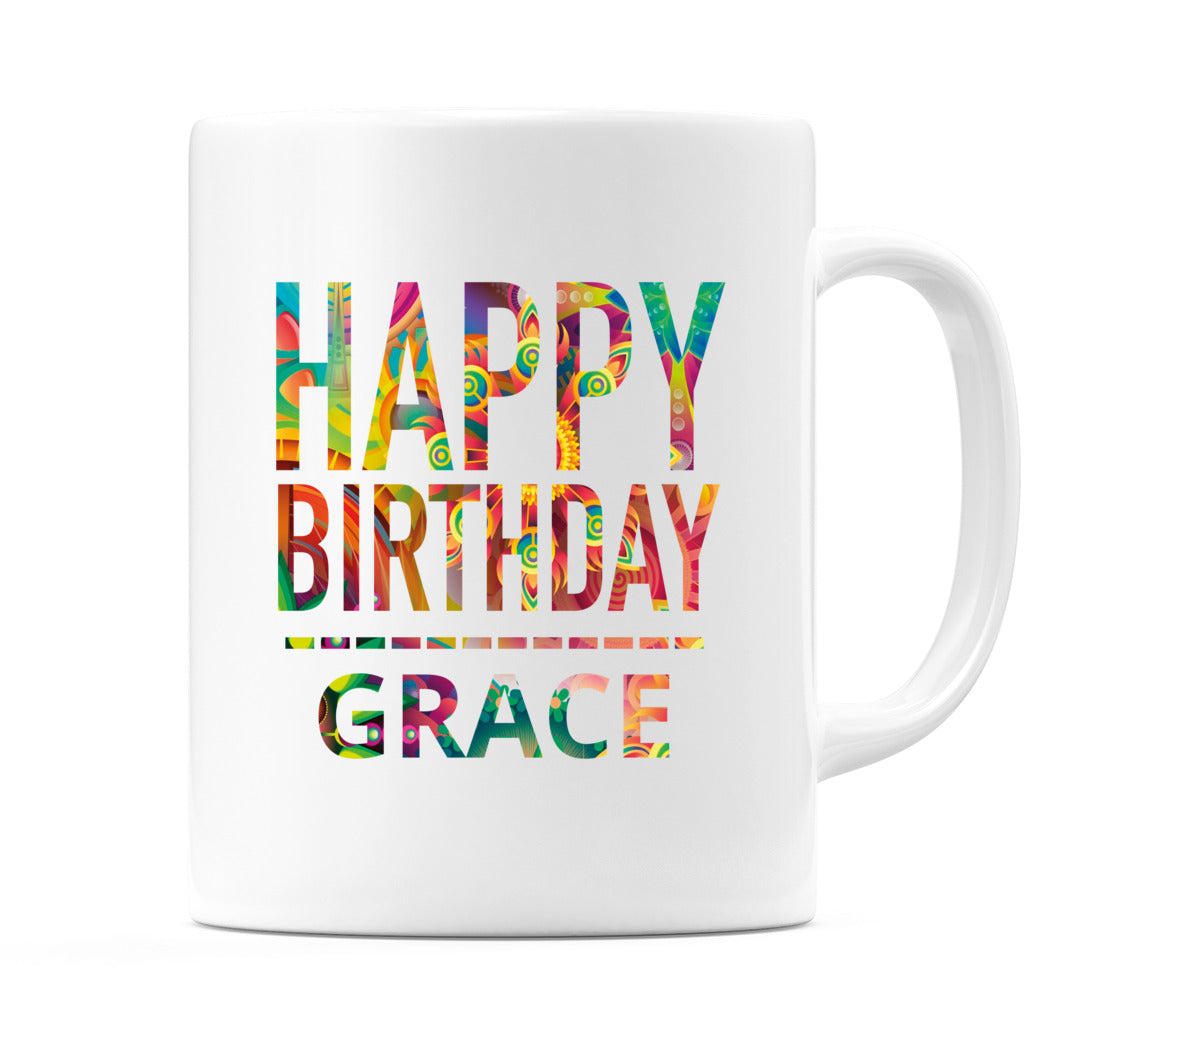 Happy Birthday Grace (Tie Dye Effect) Mug Cup by WeDoMugs